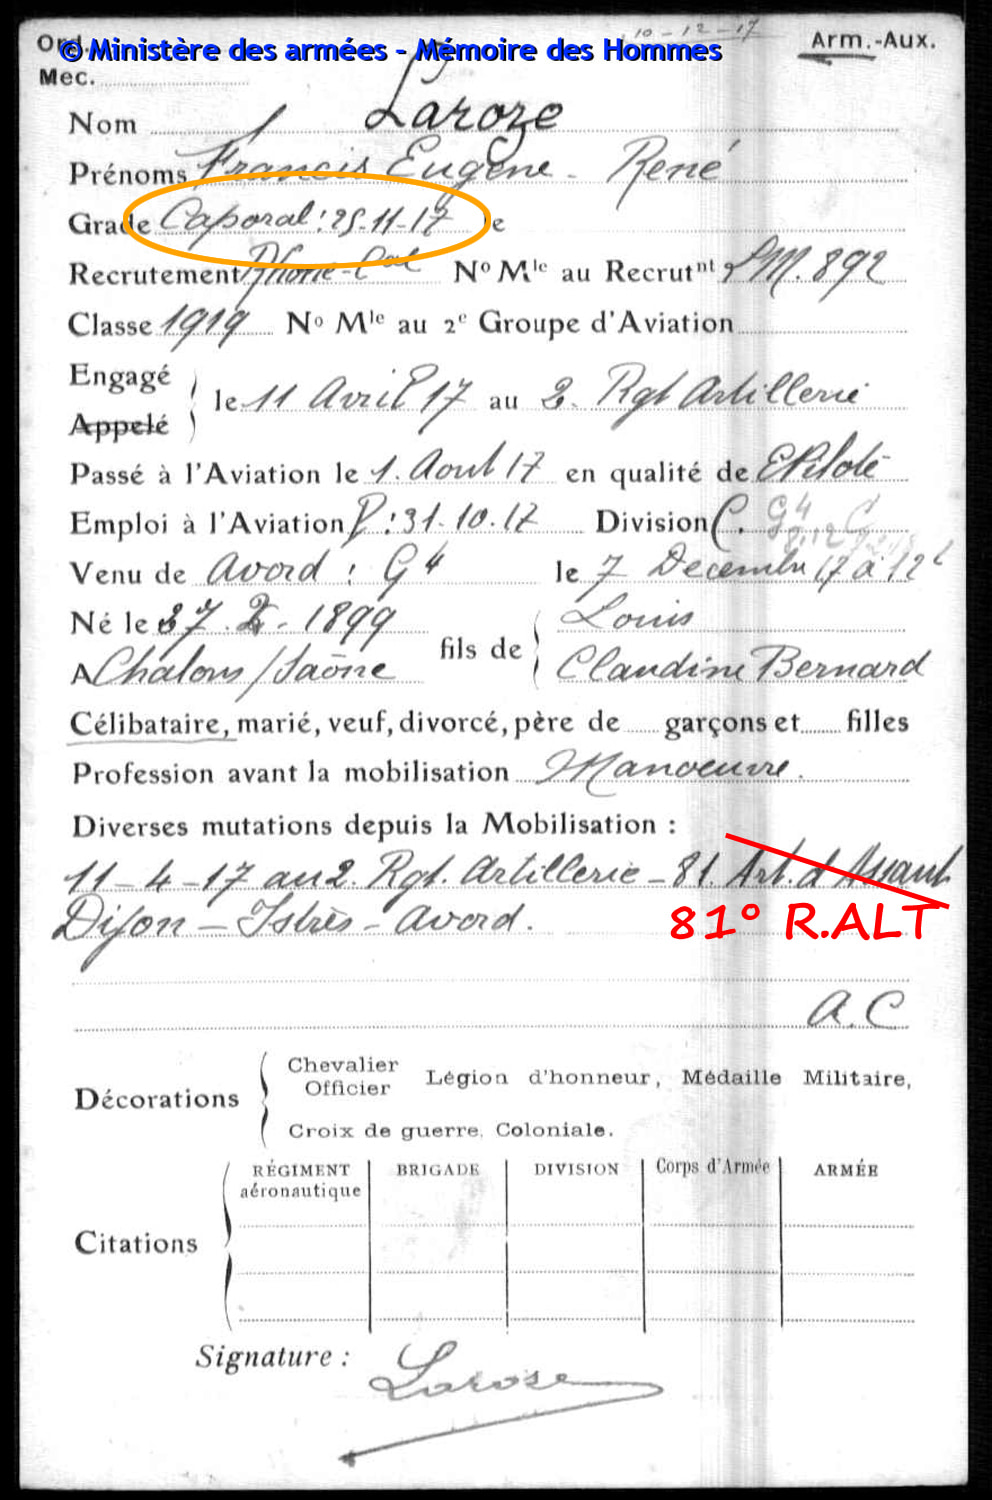 501° RAS - Brg. Françis Eugène René Laroze (04)-min.jpg